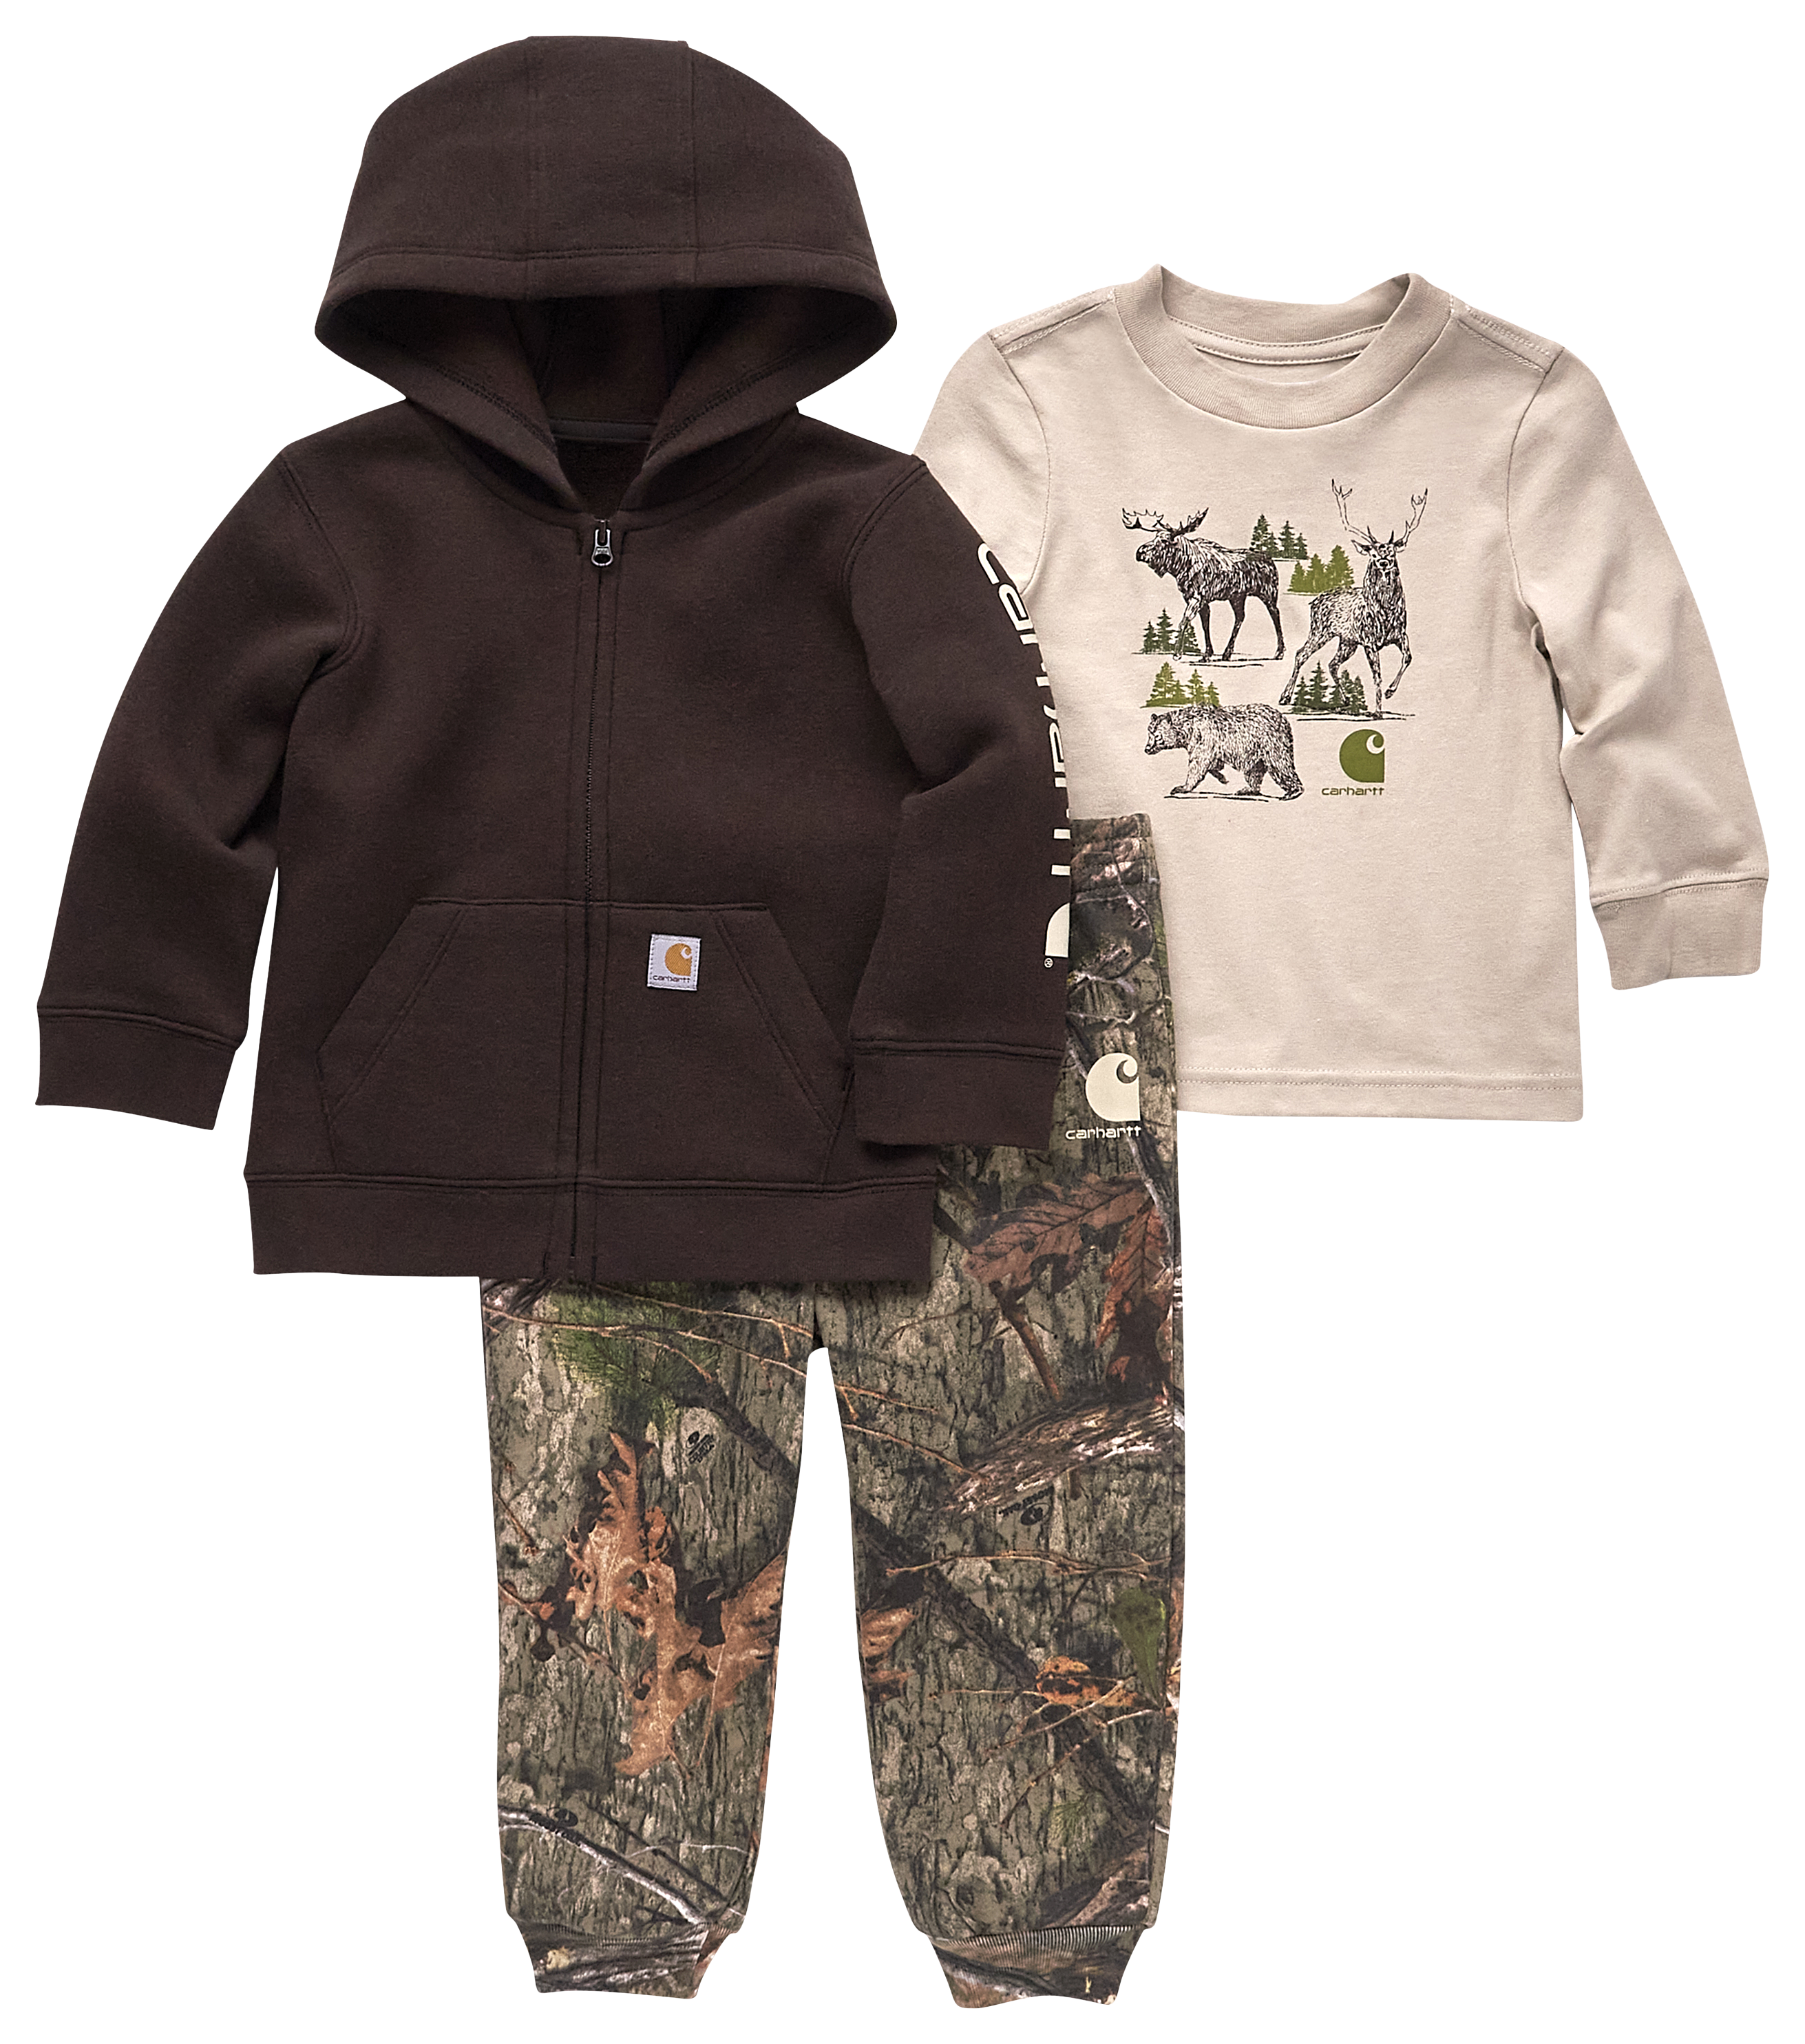 Carhartt Long-Sleeve T-Shirt, Jacket, and Fleece Pants 3-Piece Set for Babies - Mossy Oak Country DNA - 12 Months